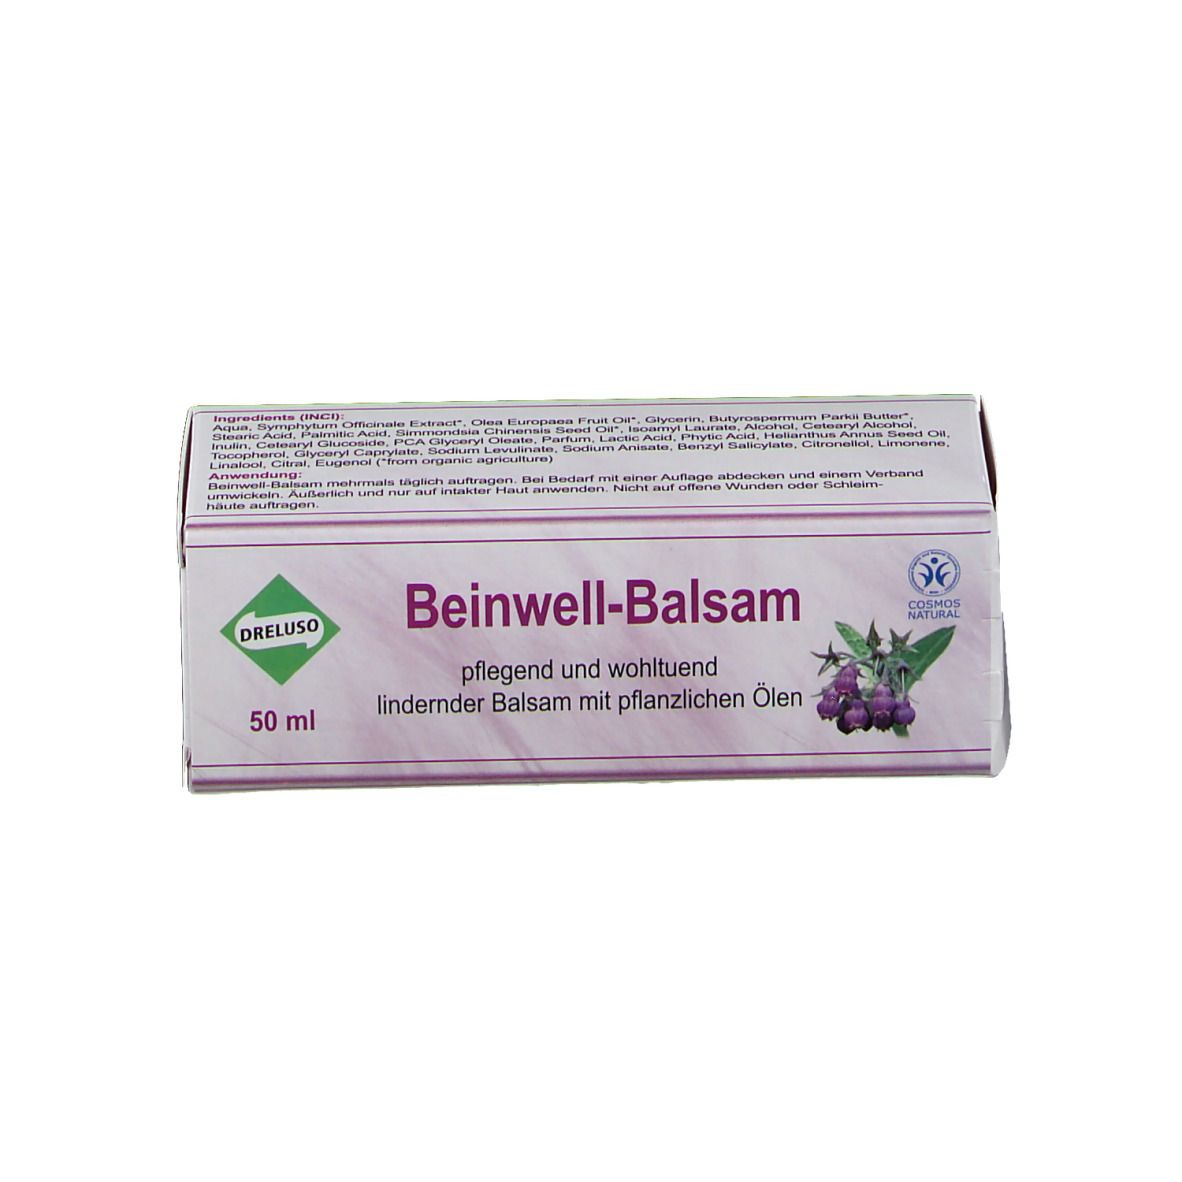 Beinwell-Balsam